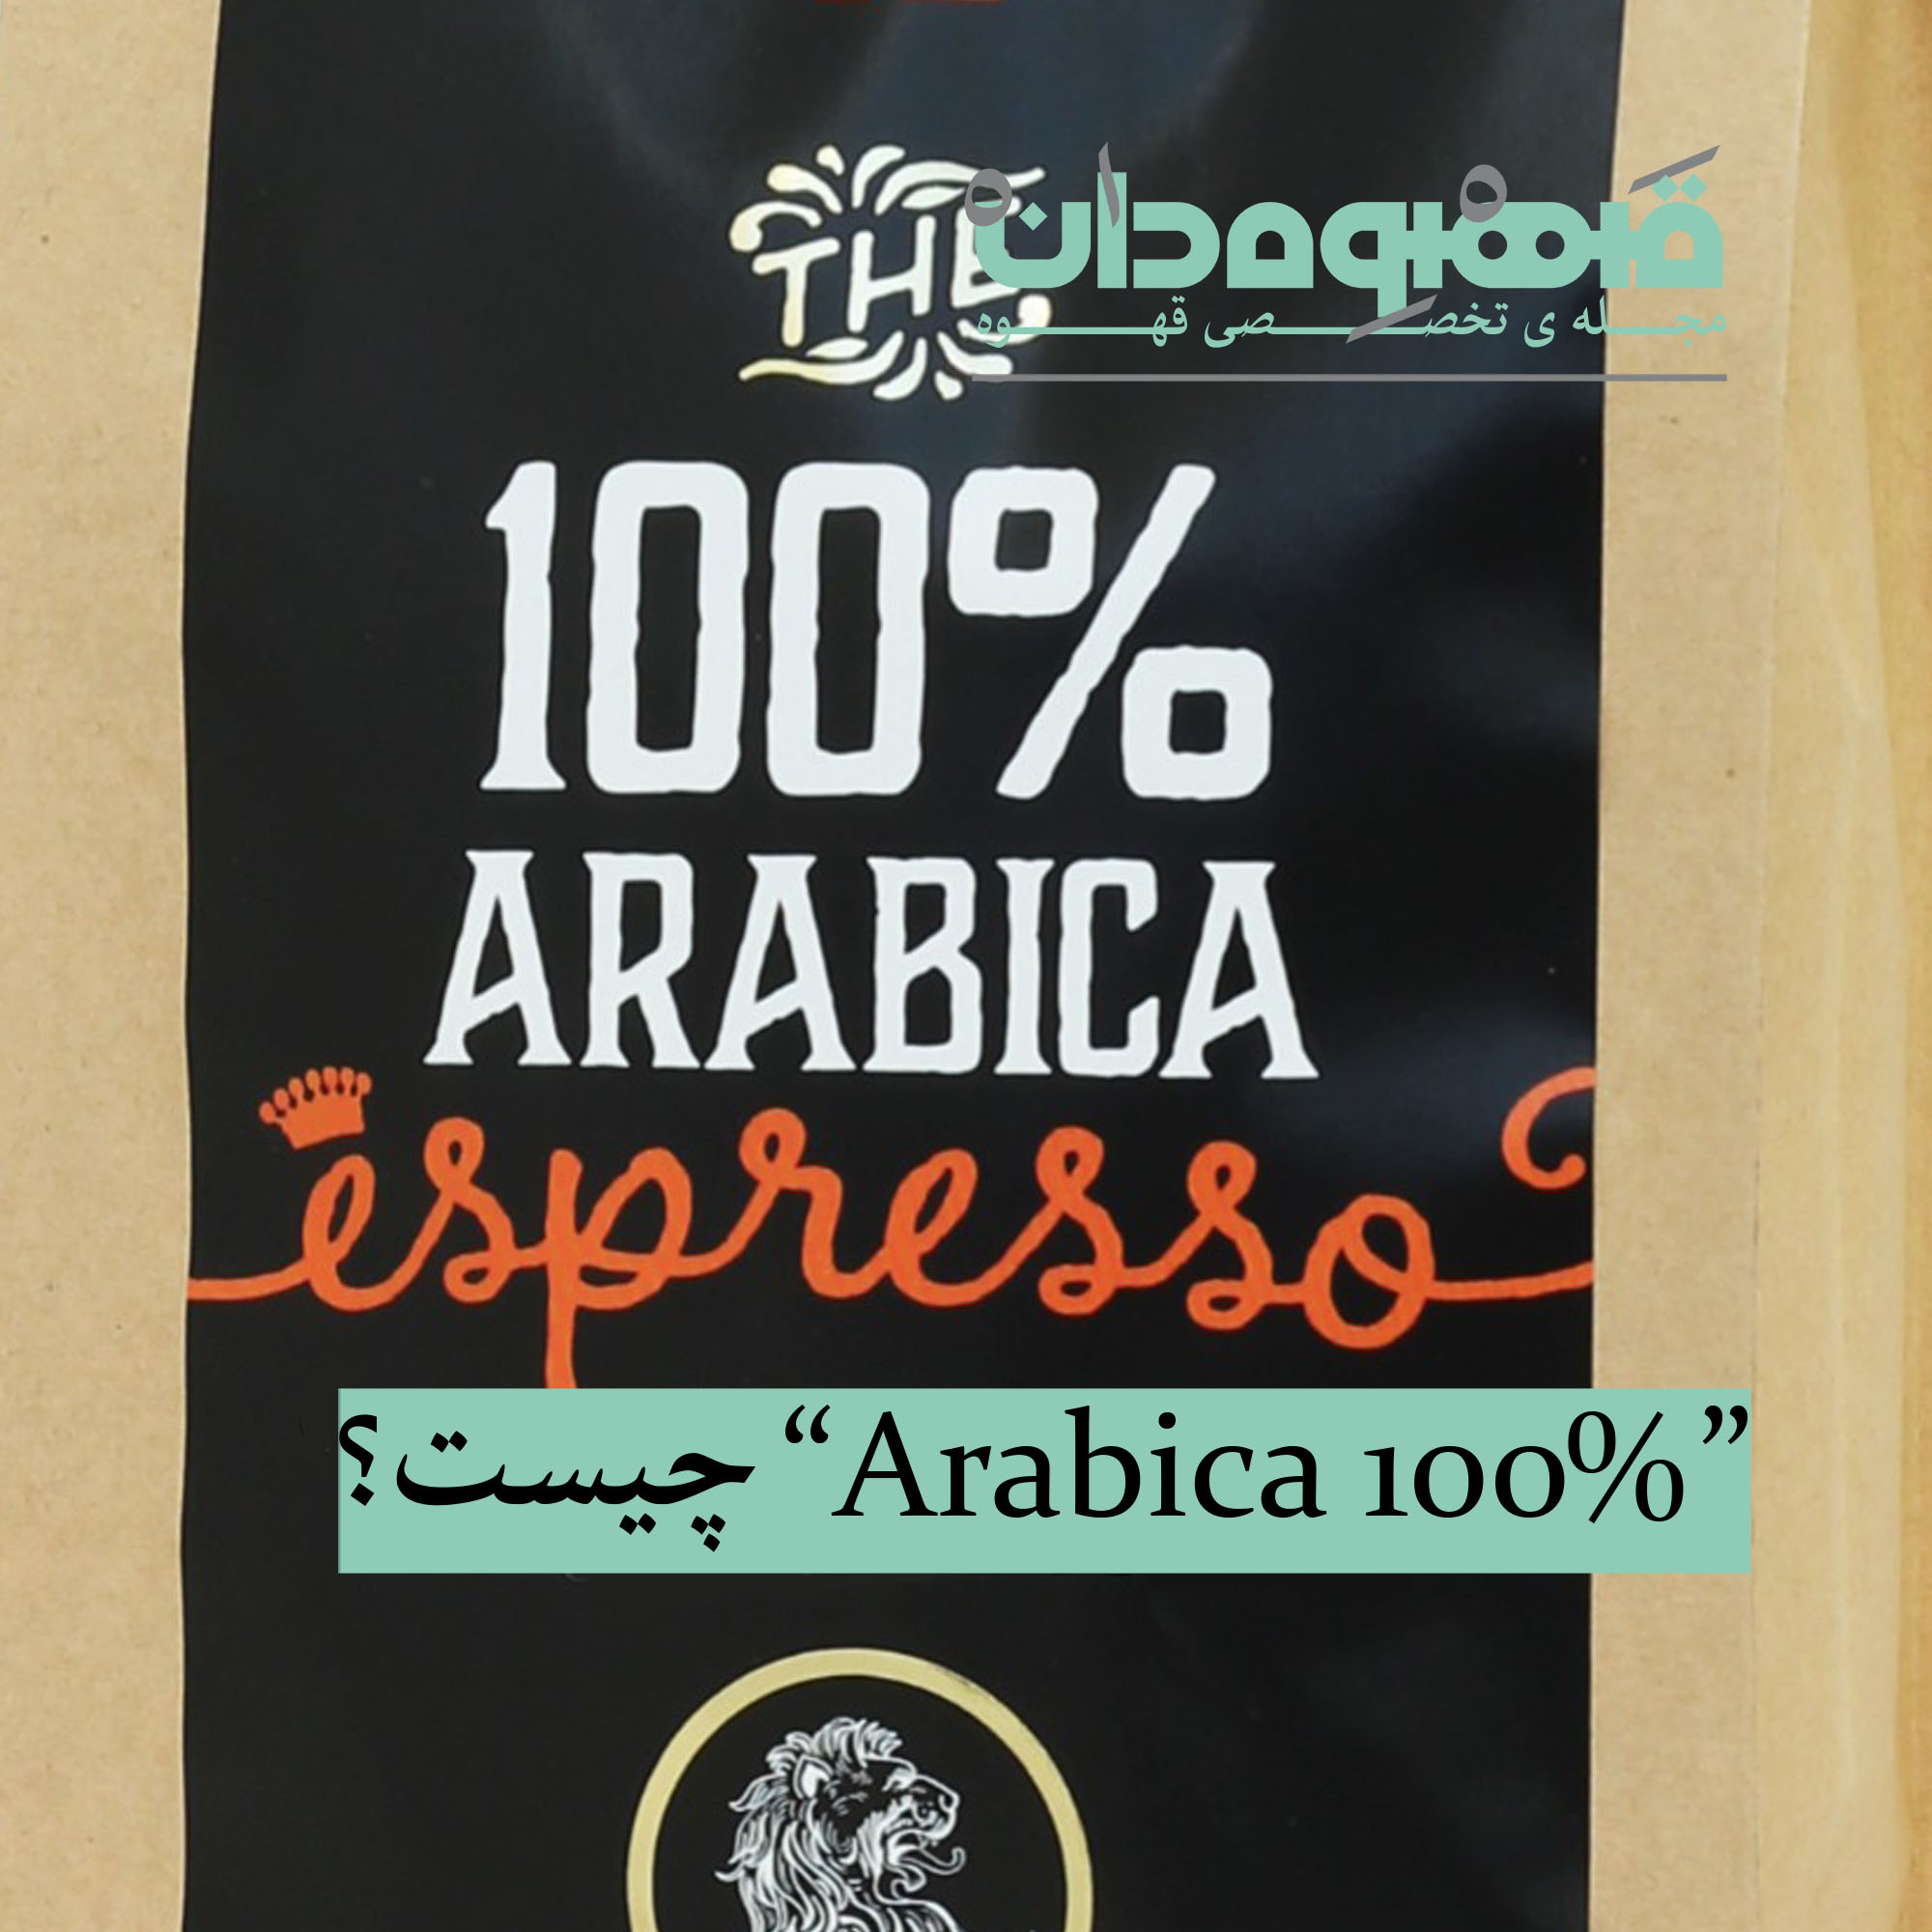 "%100 Arabica" چیست؟